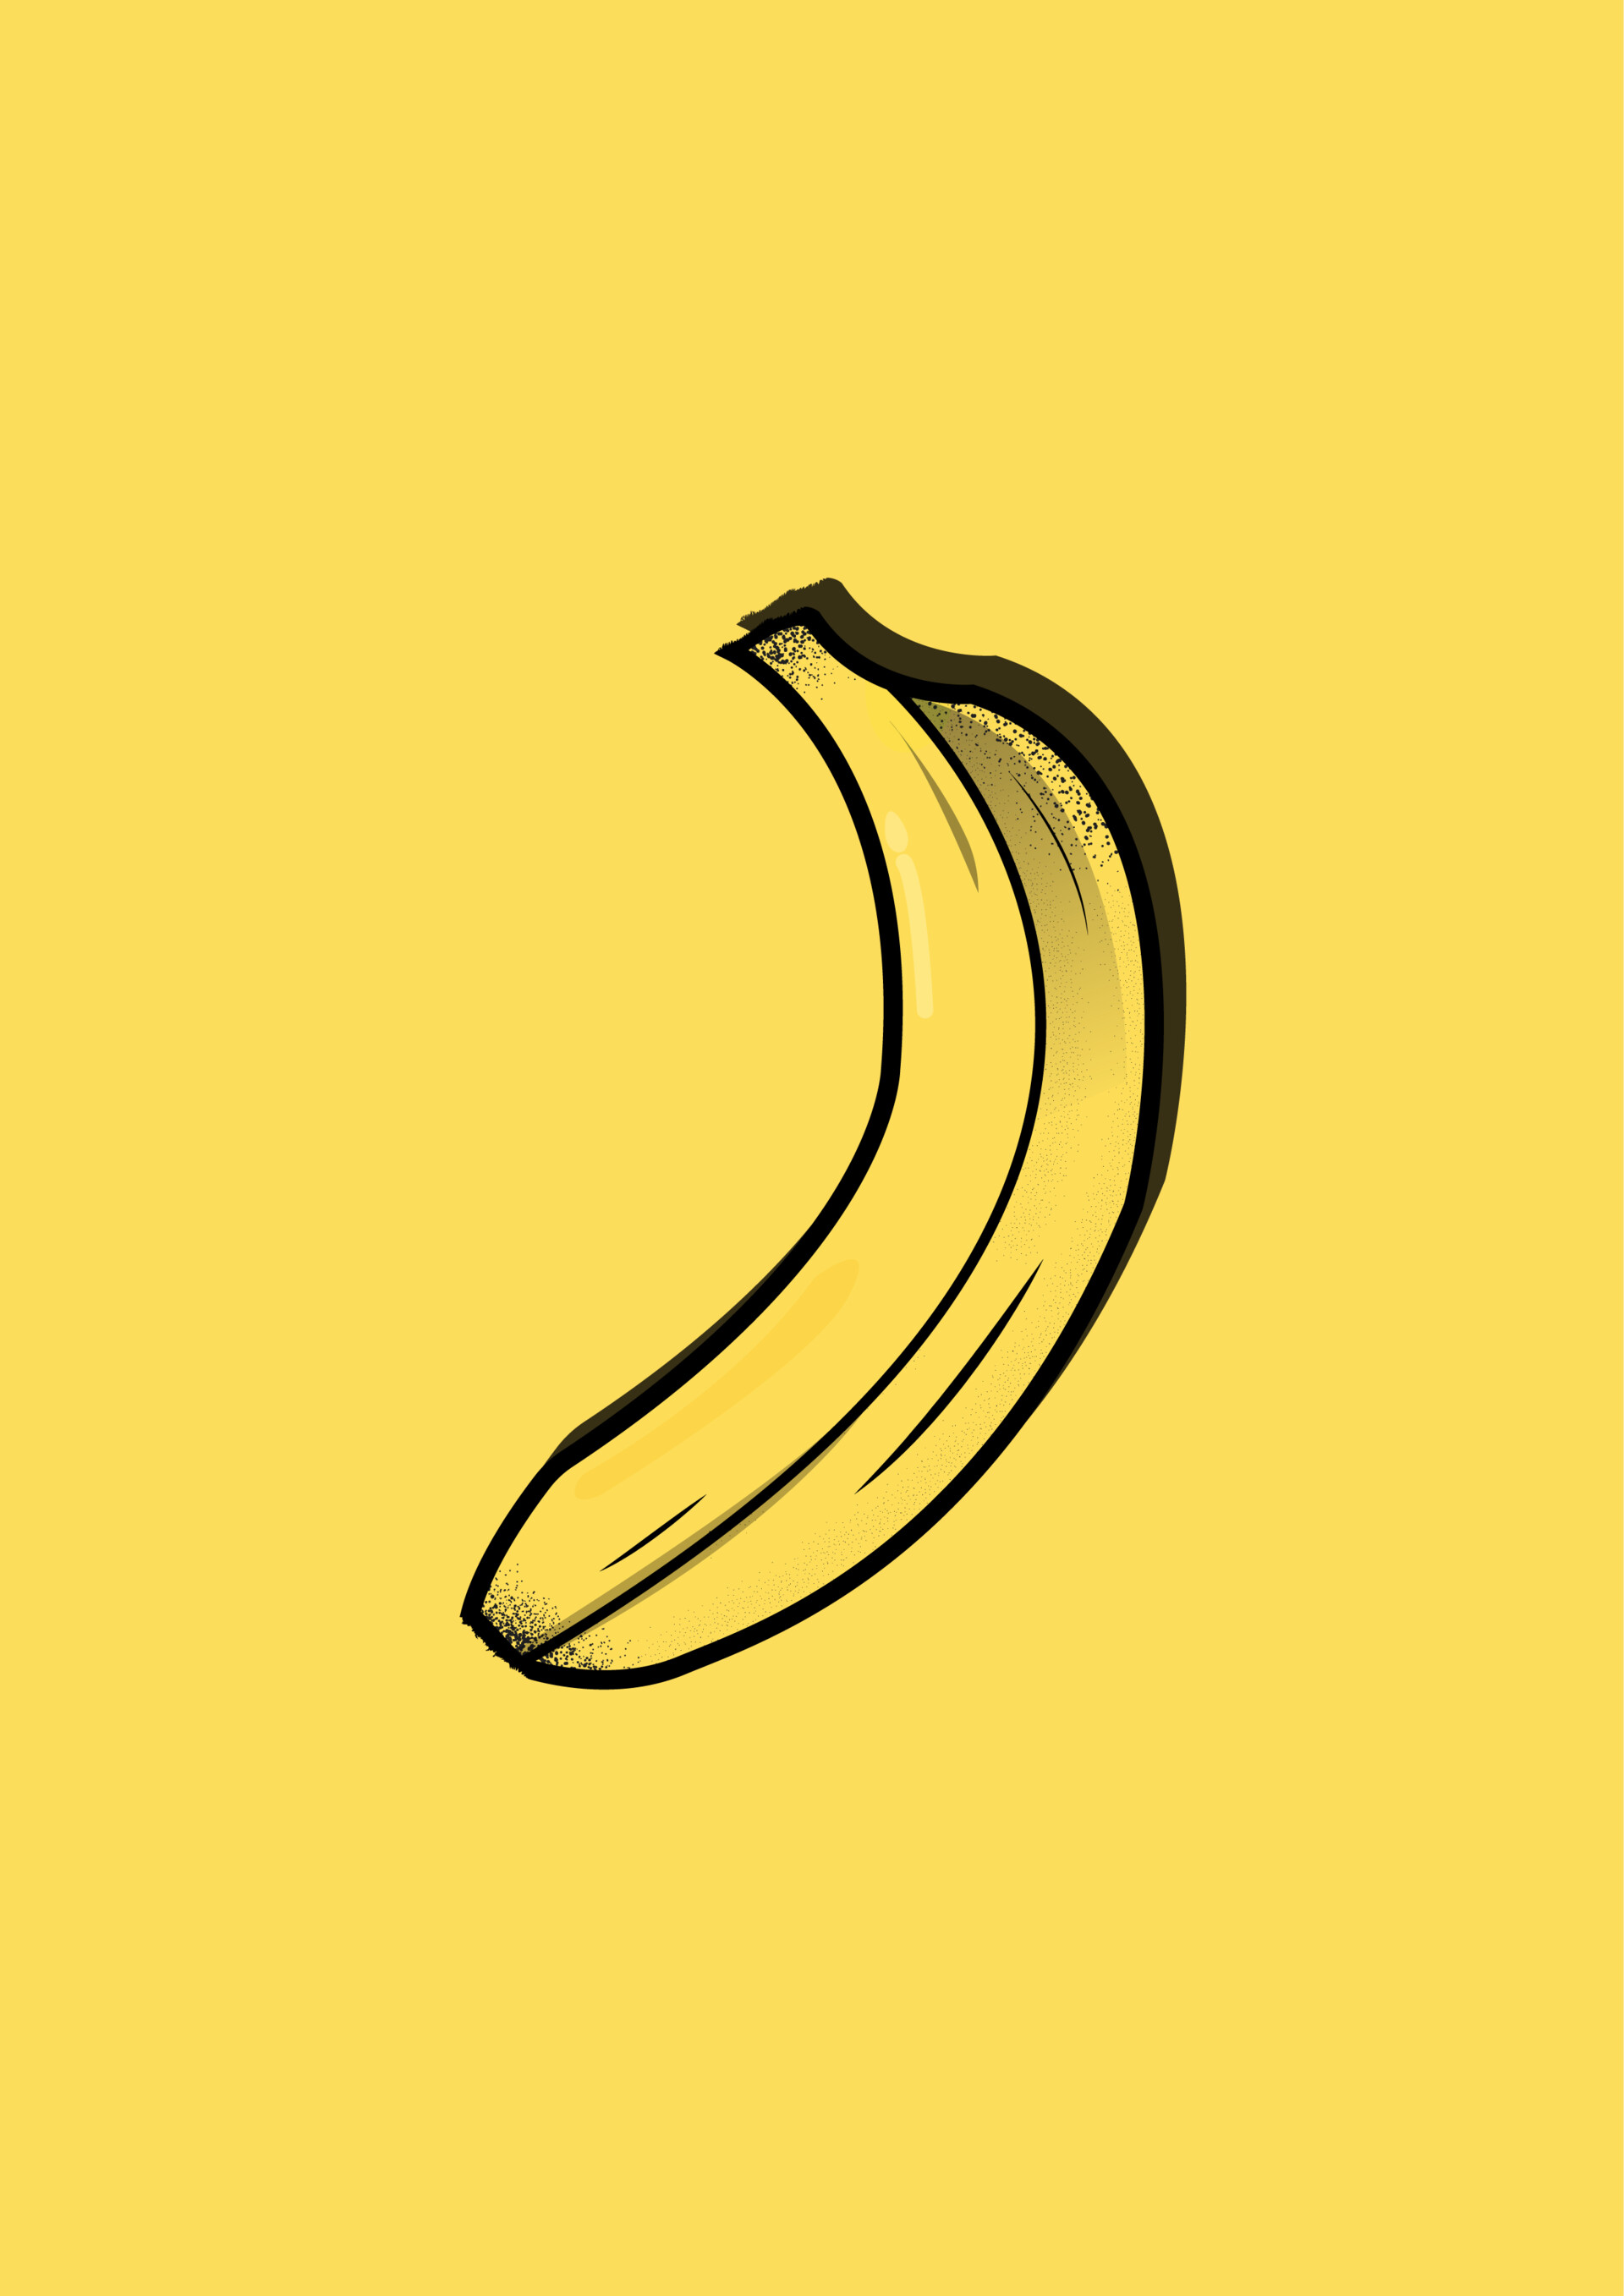 Uzair khan banana 01